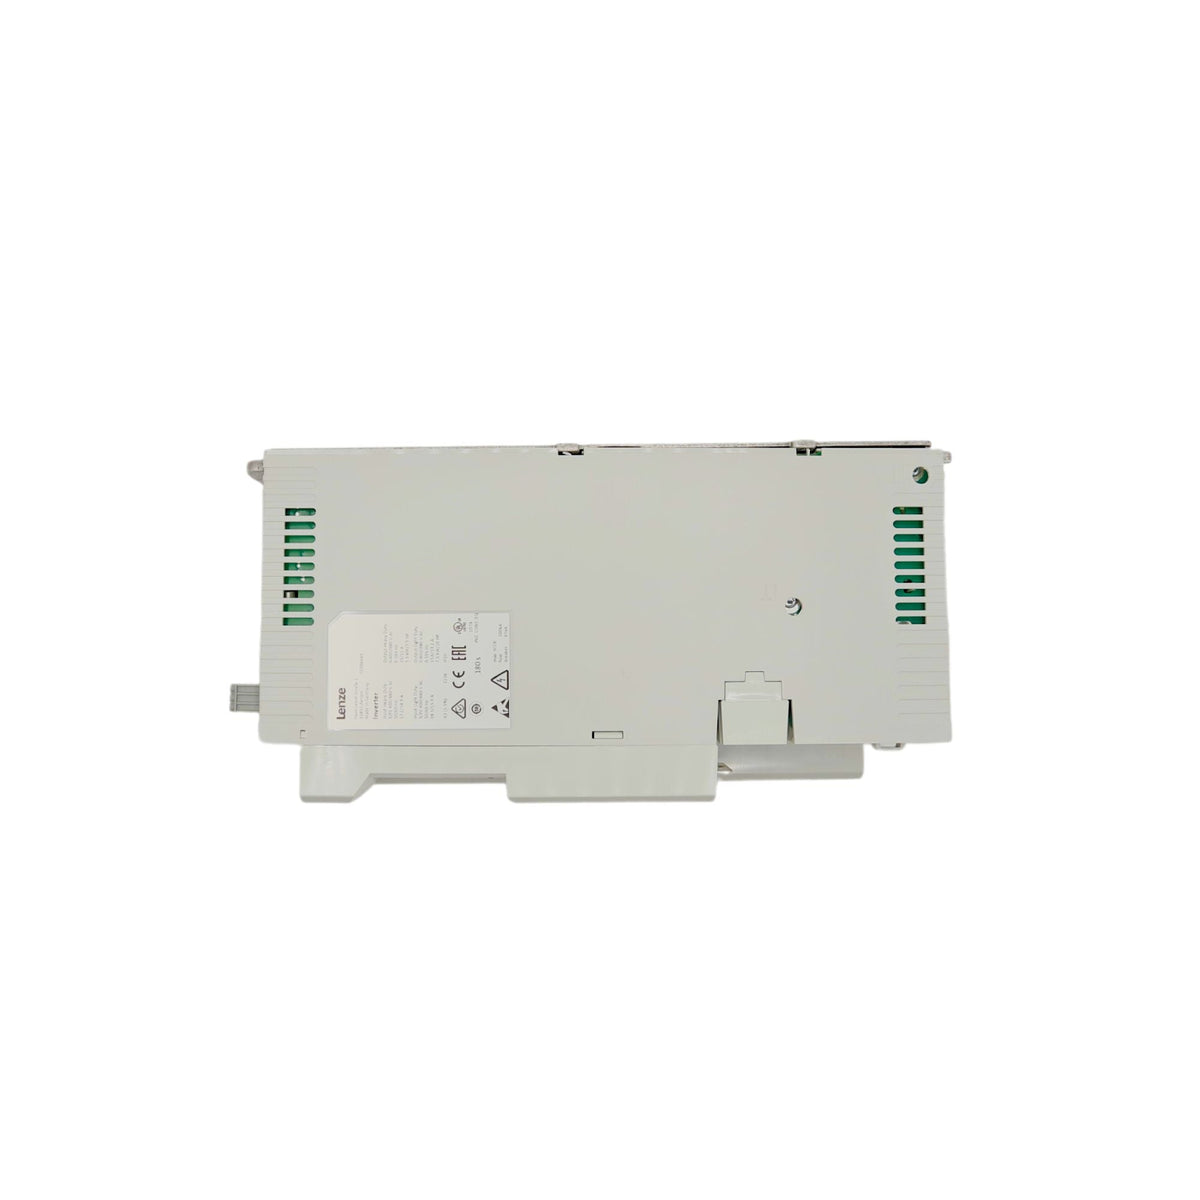 Lenze | i510 7.5hp Cabinet Mount VFD | I51AE255F10V11000S